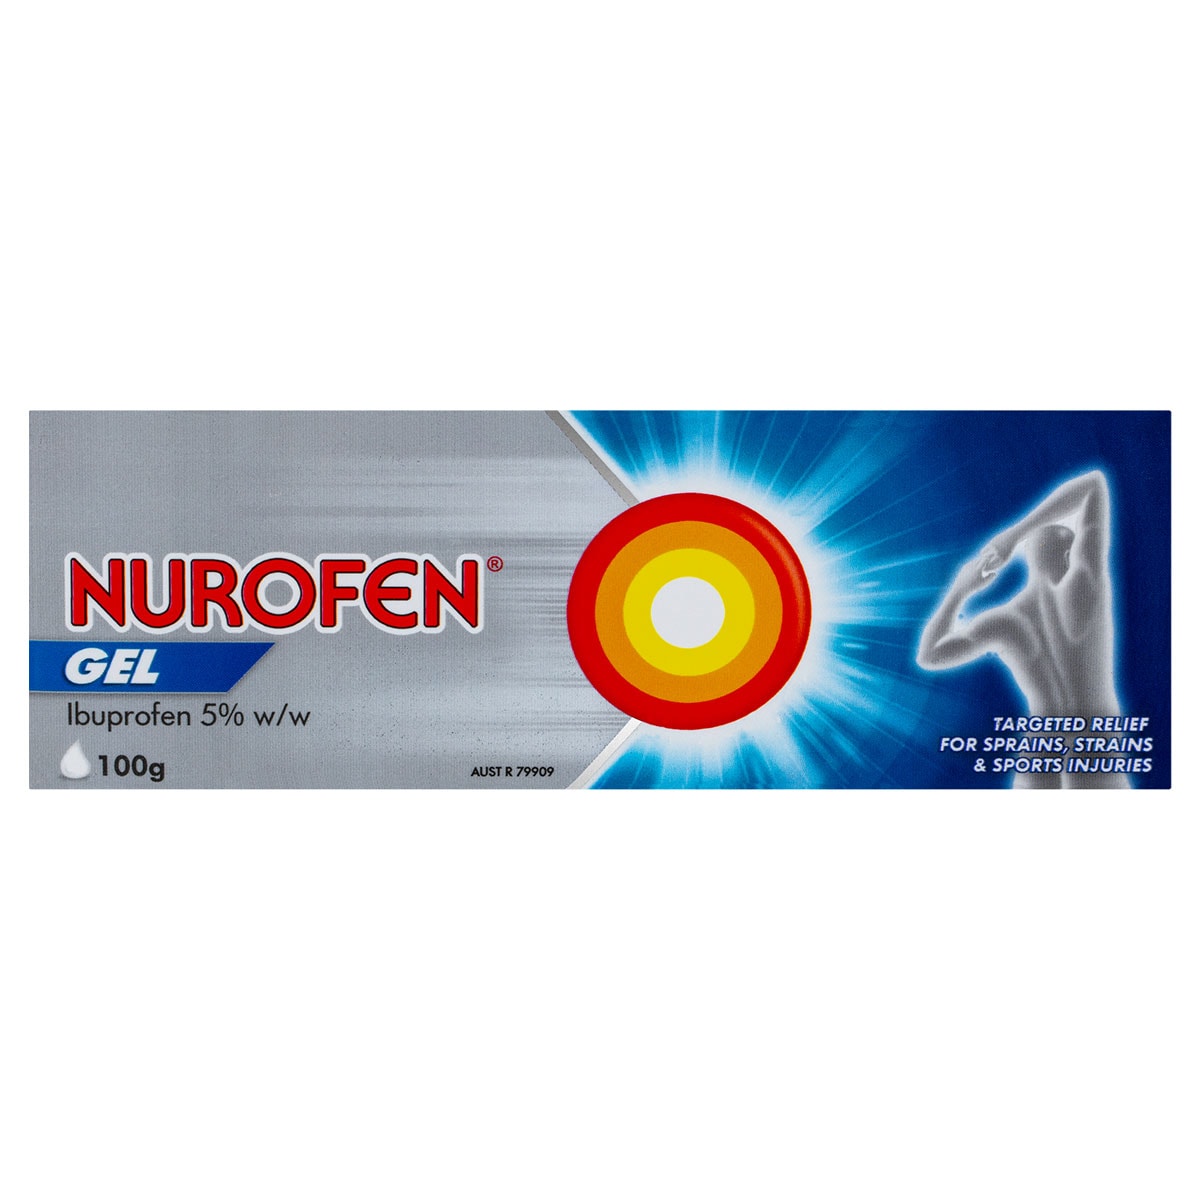 Nurofen Pain & Inflammation Targeted Relief Gel 100g